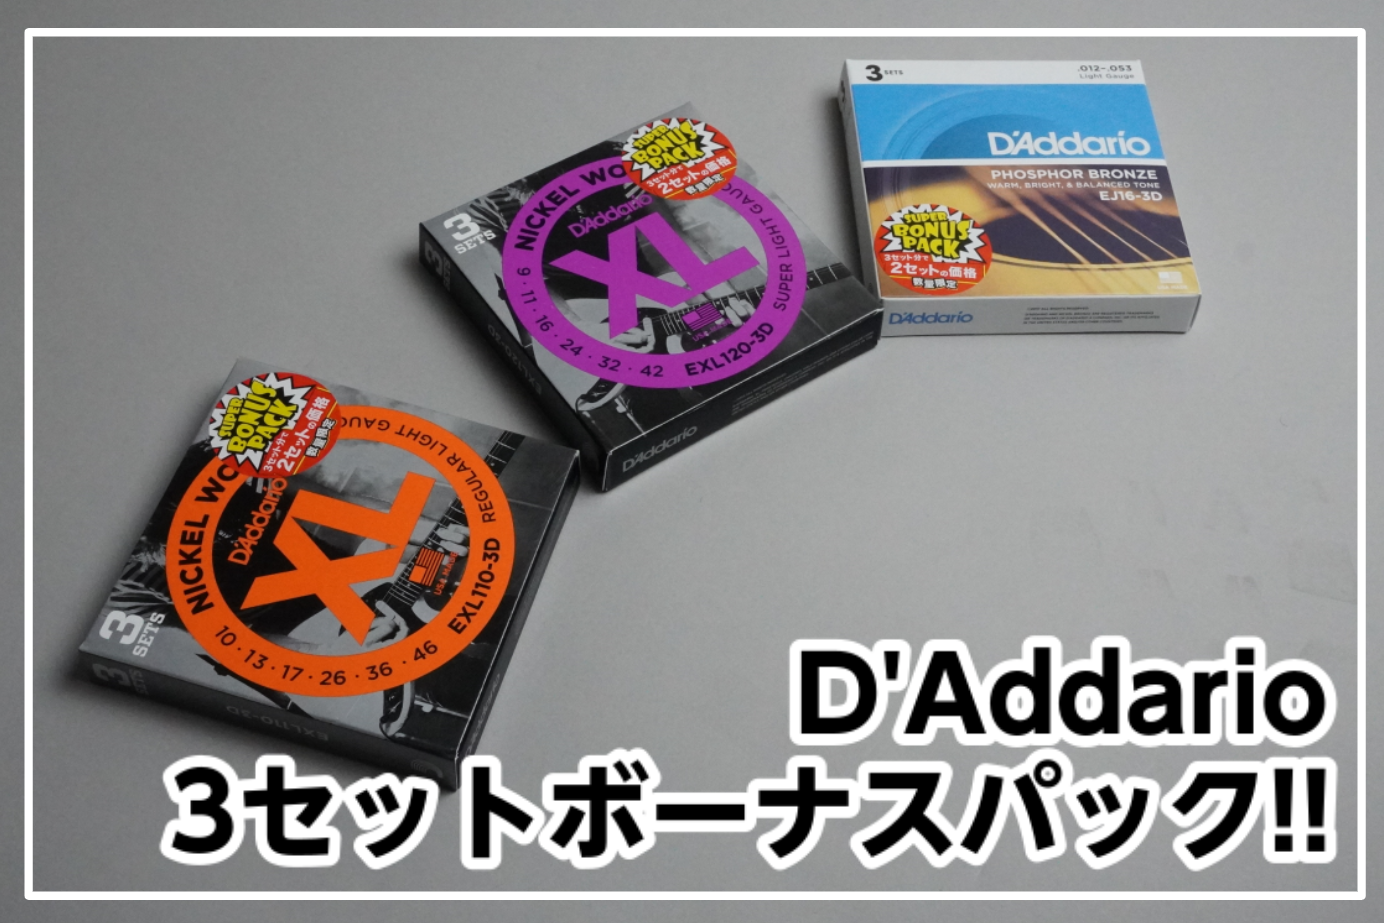 D’Addario SUPER BONUS PACK -スーパーボーナスパック-入荷